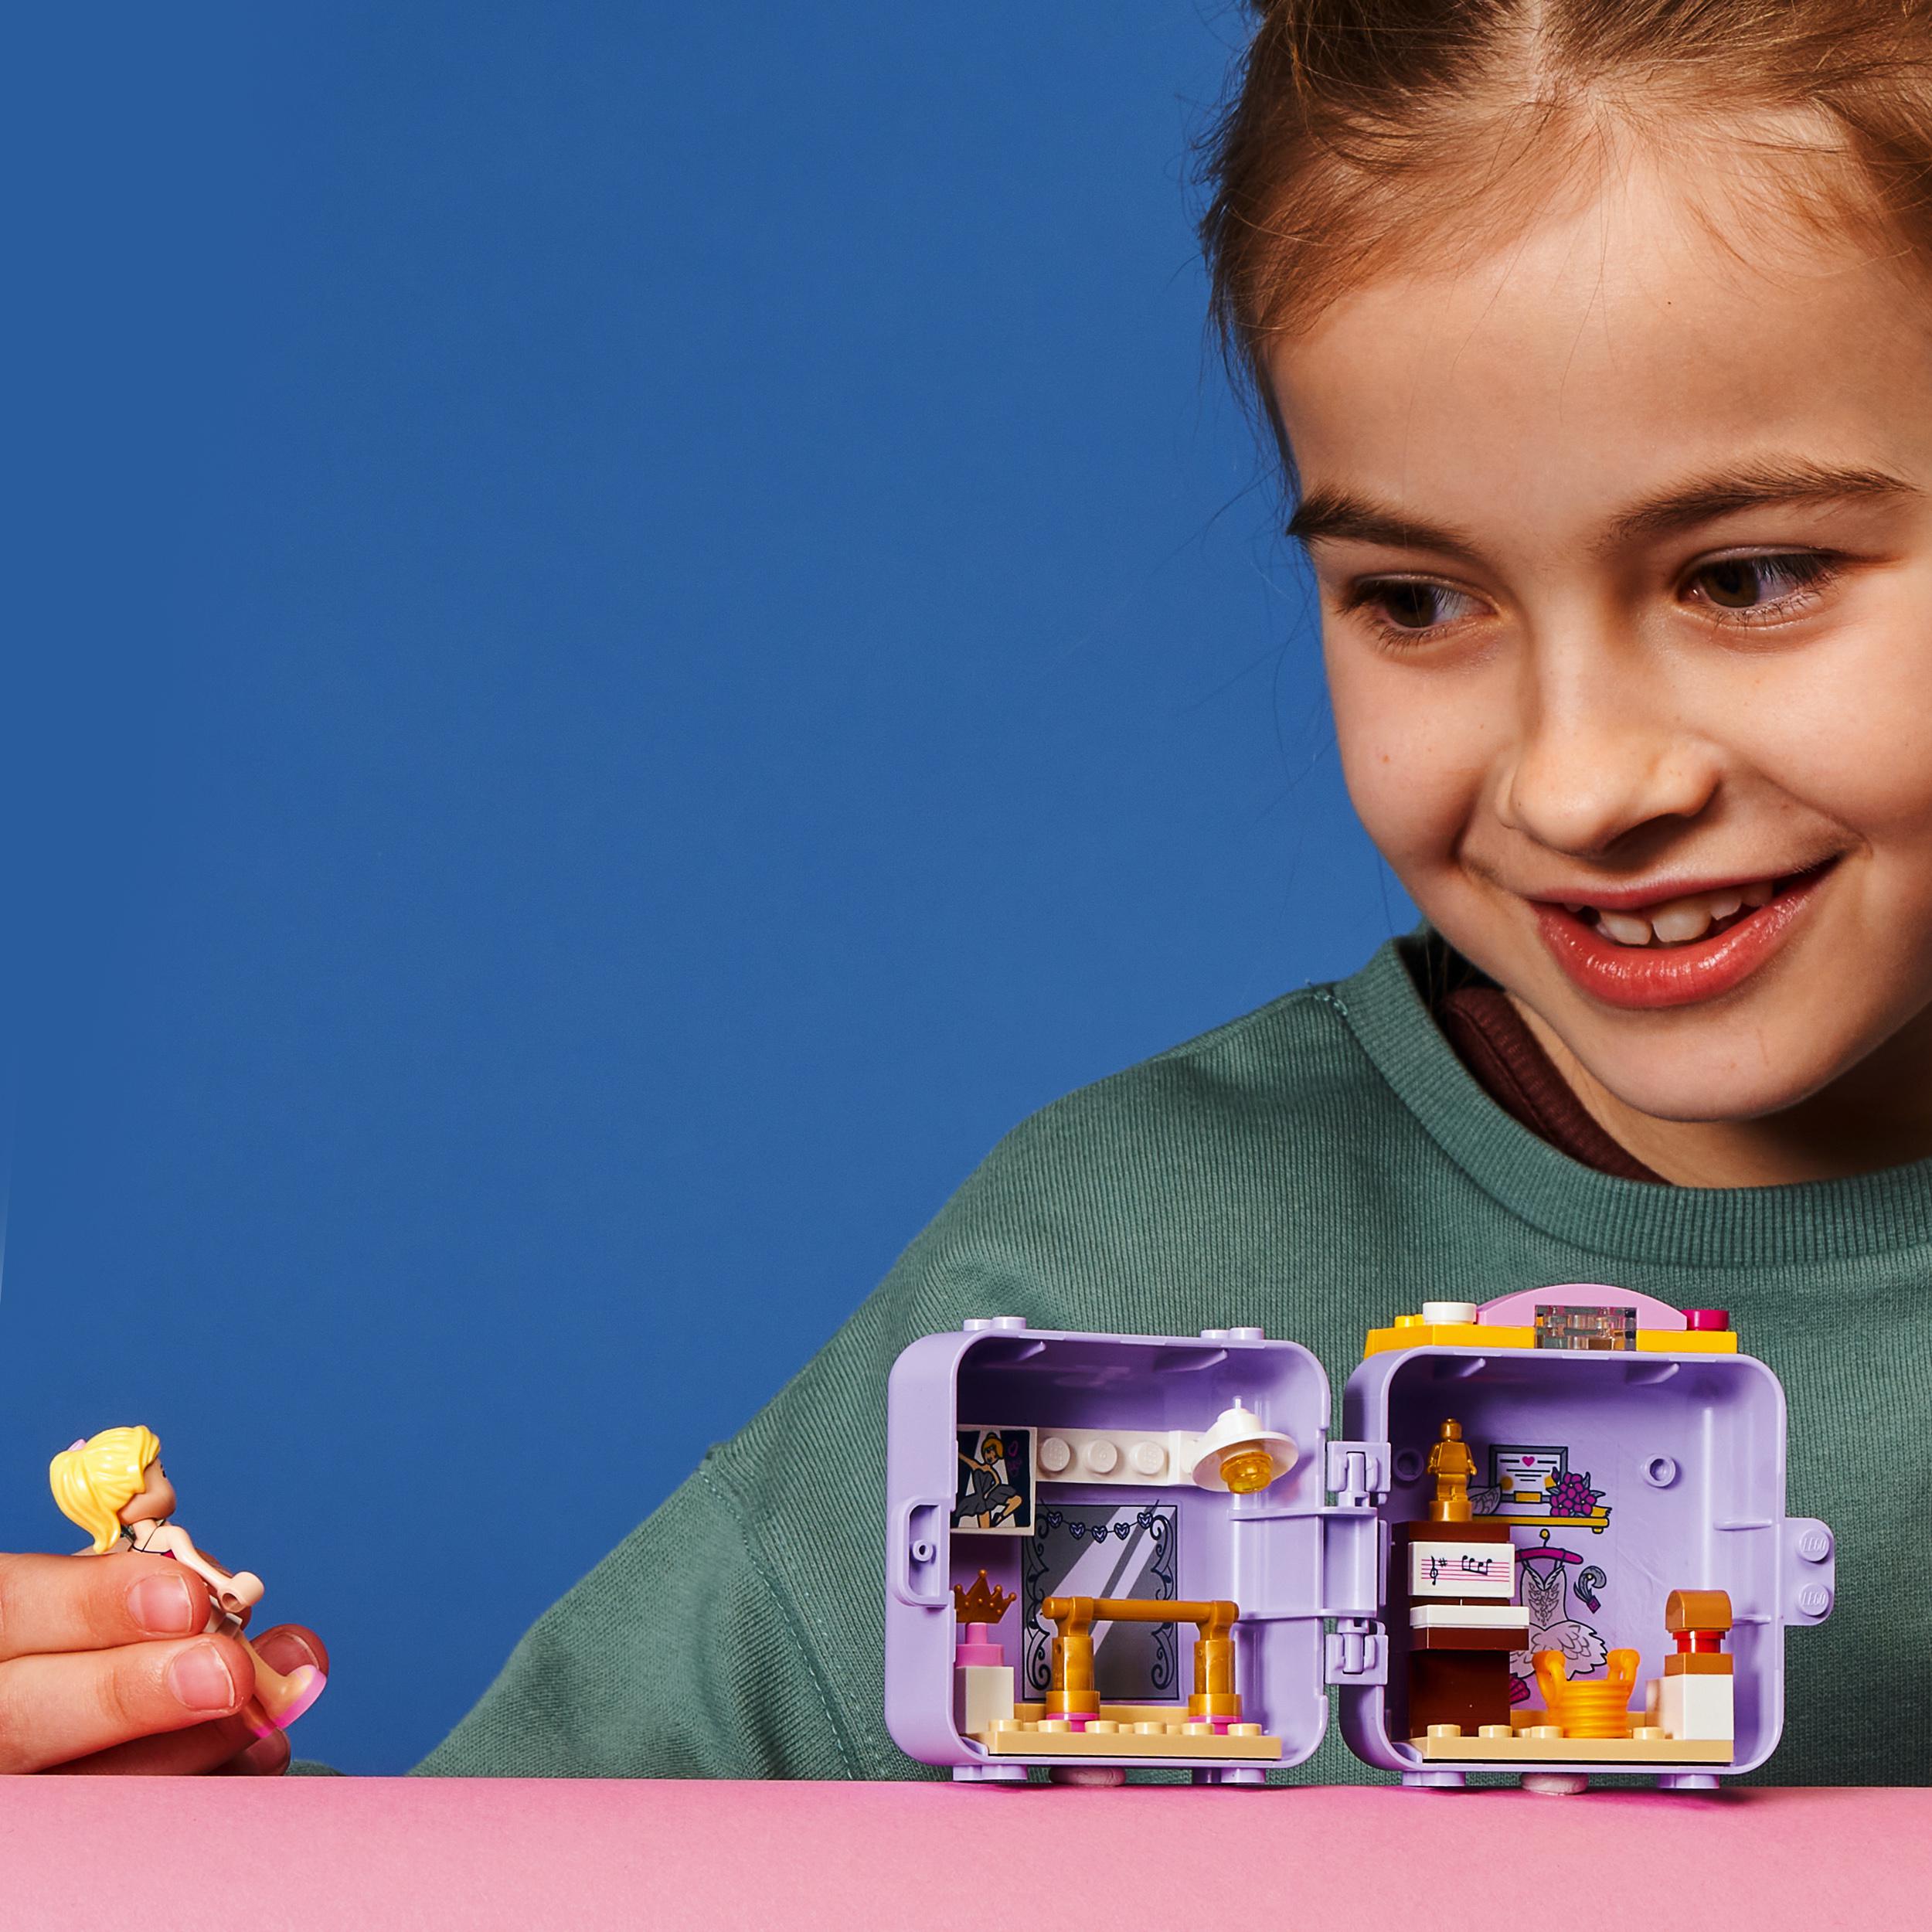 LEGO® Friends Stephanie's Ballet Cube Play Set 41670 Default Title